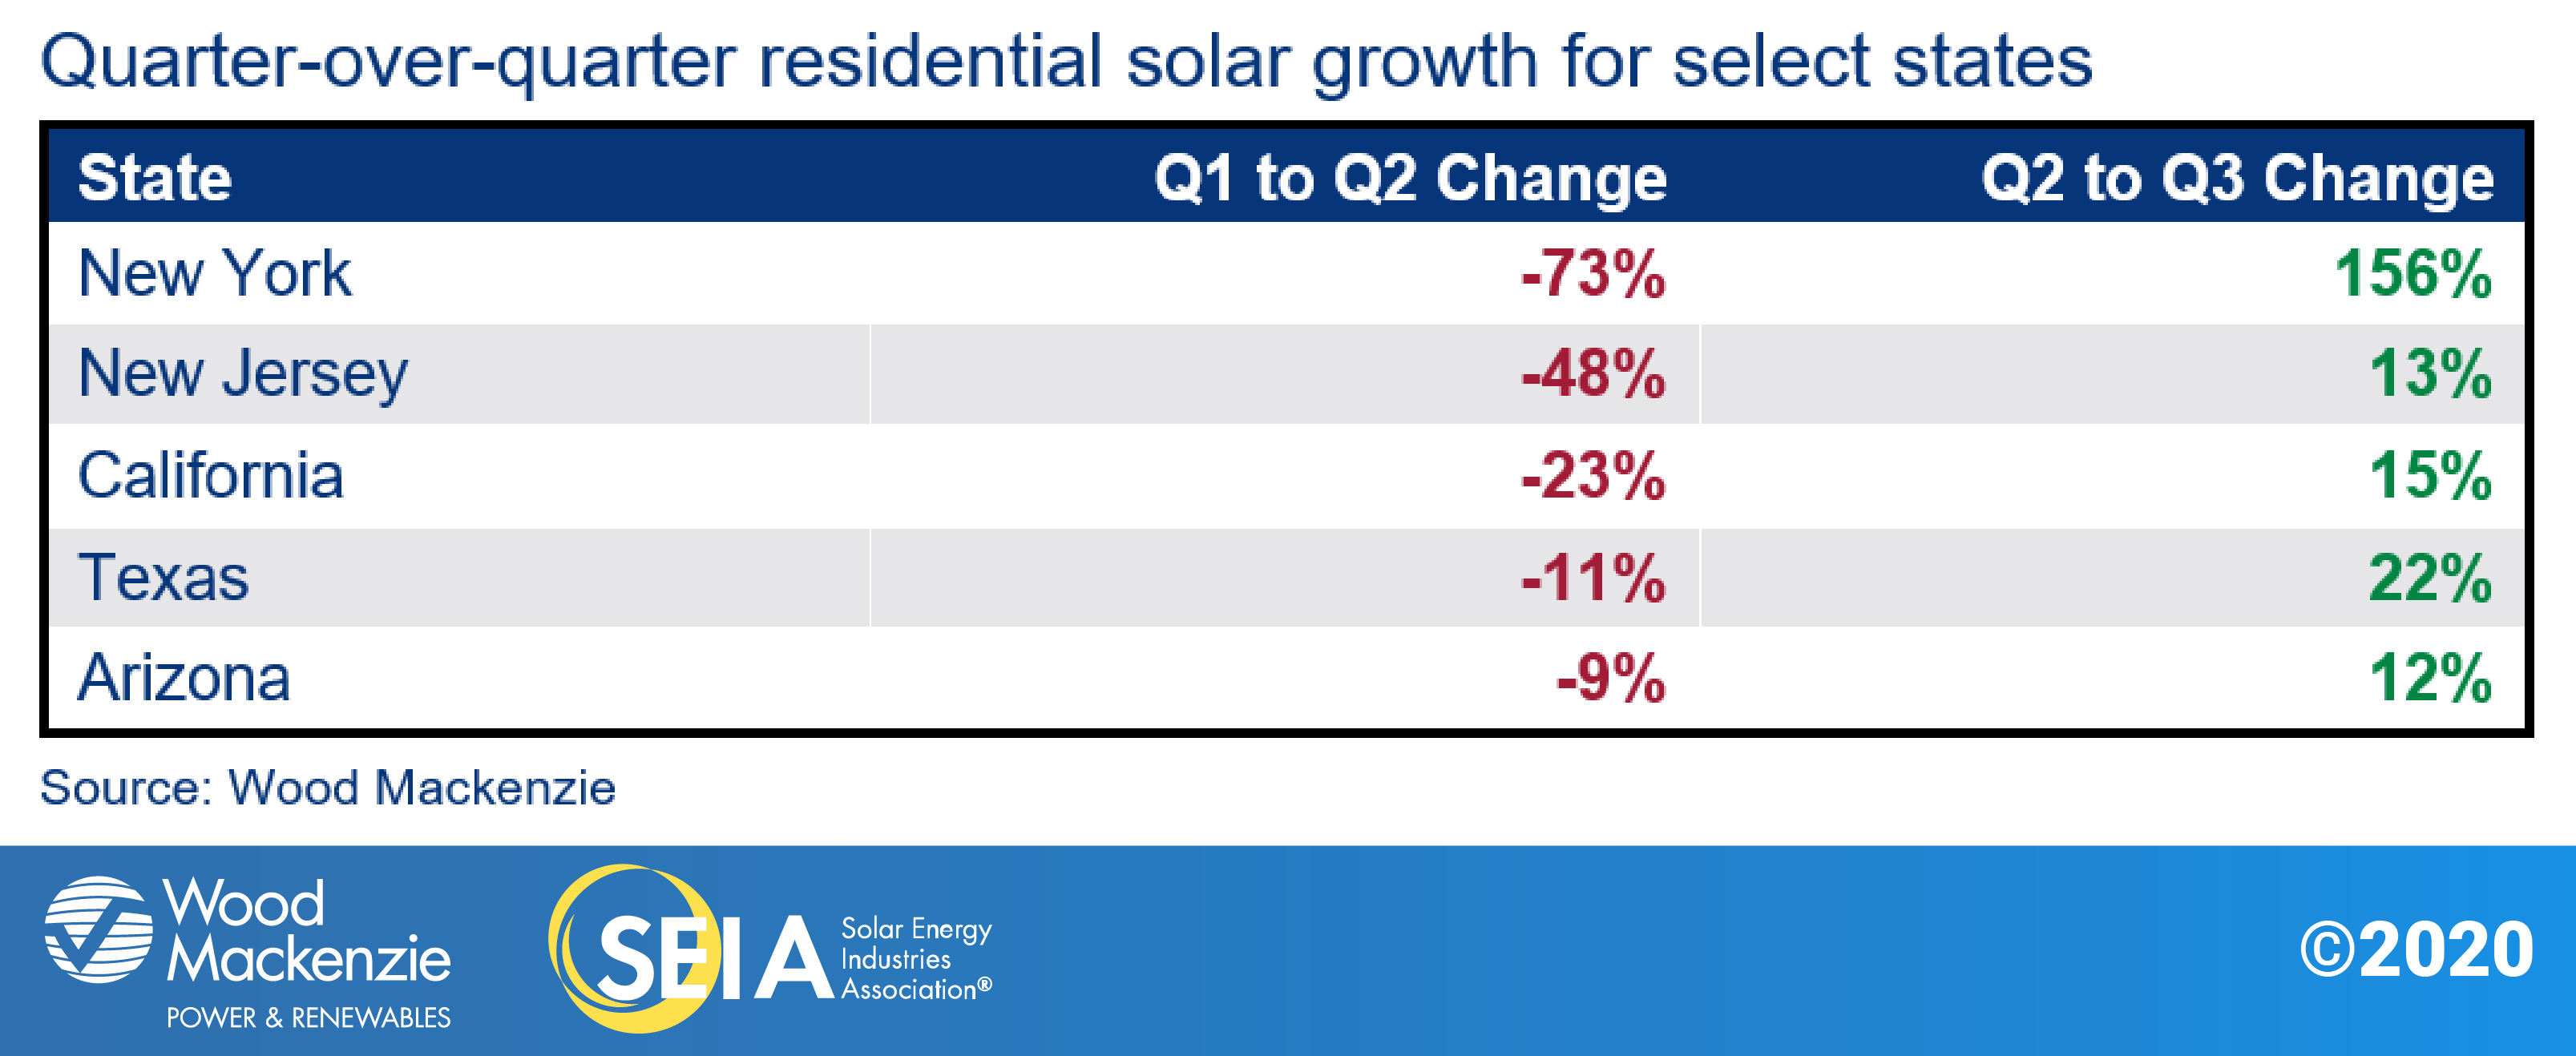 quarter-over-quarter residential solar growth for select states